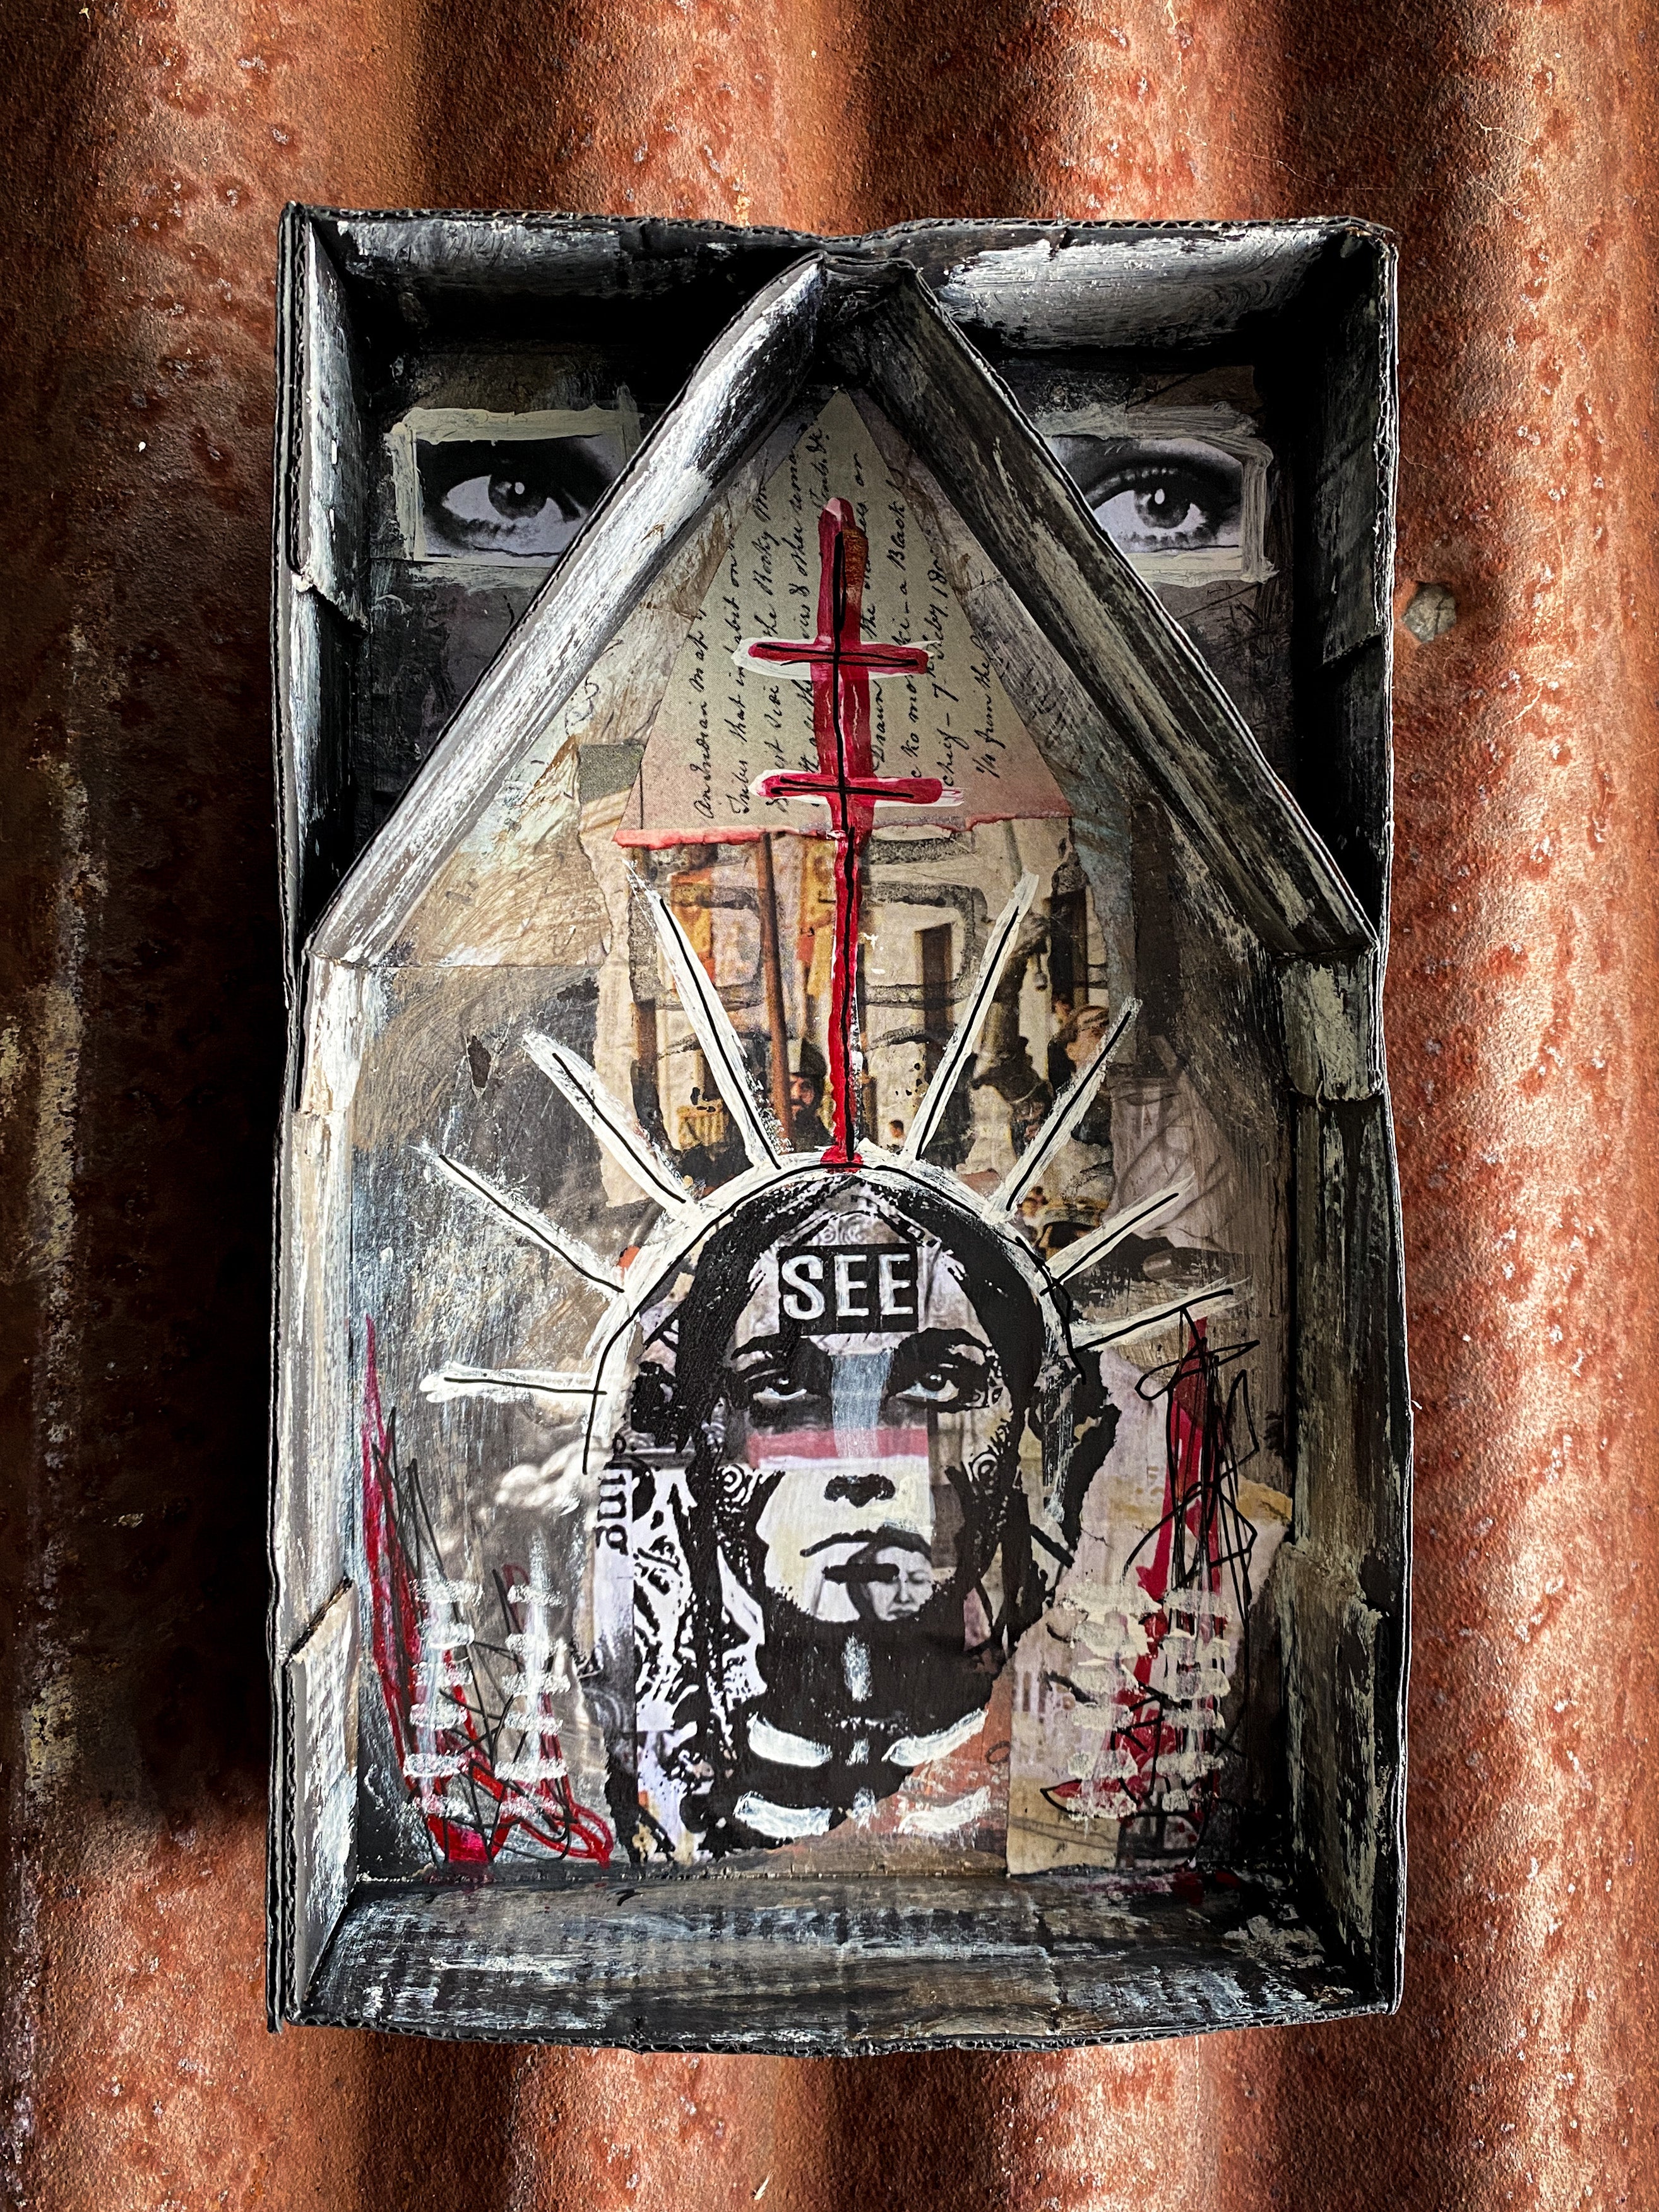 The Seer - Original Mixed Media Shrine - Collage Assemblage Art